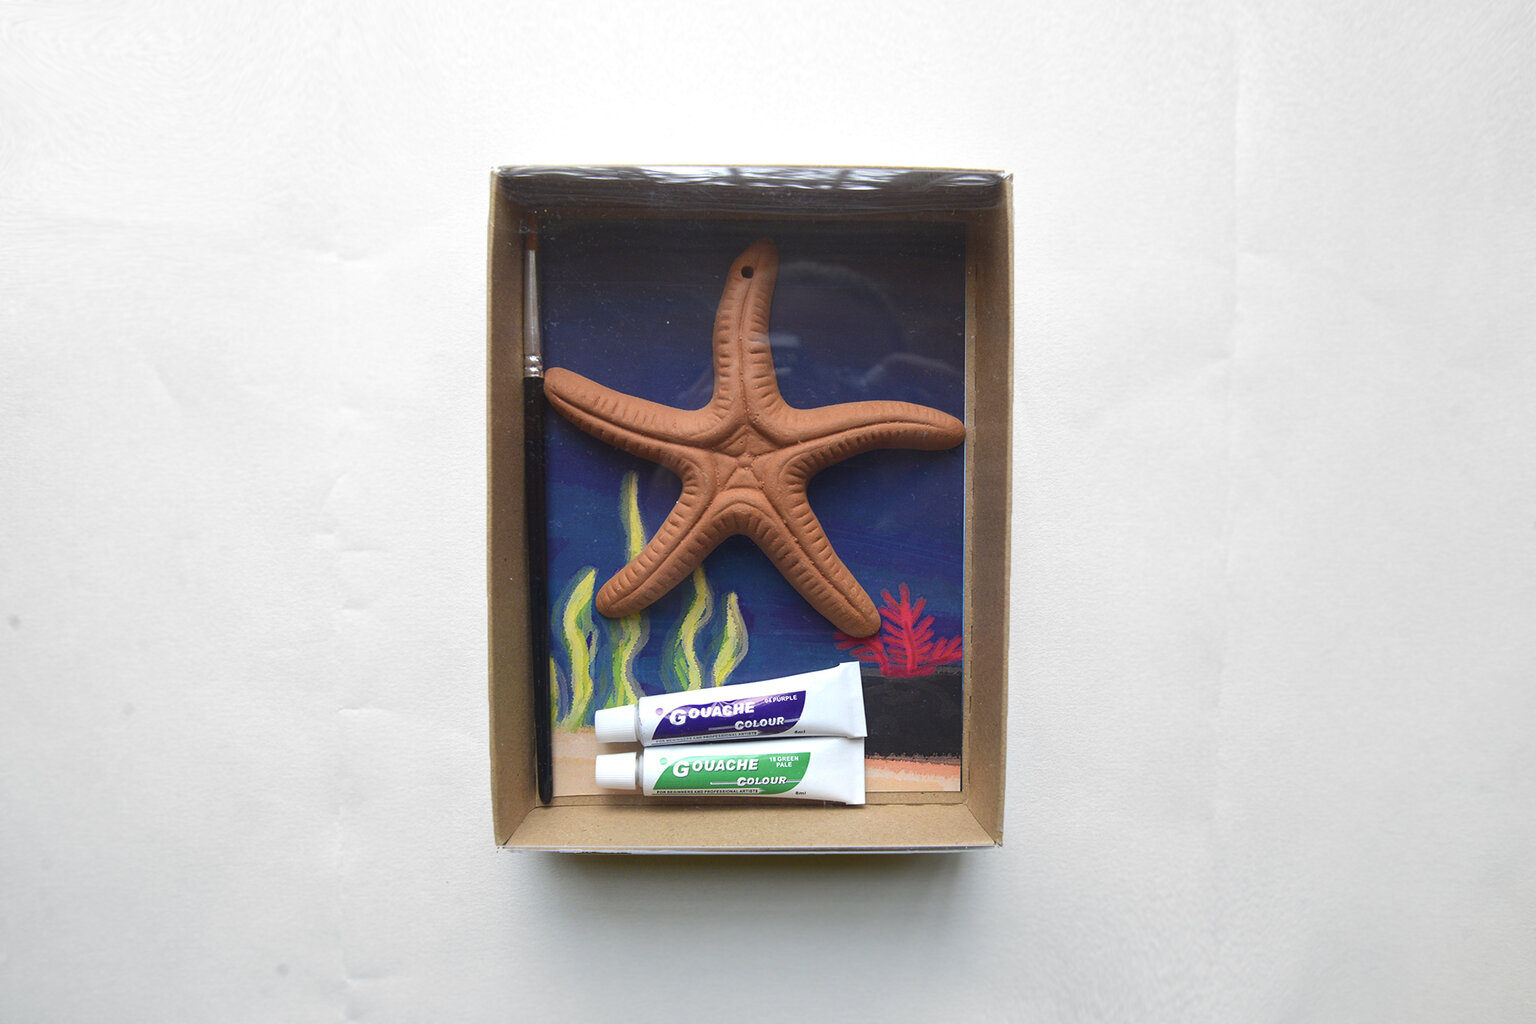 "Painting the starfish" kit